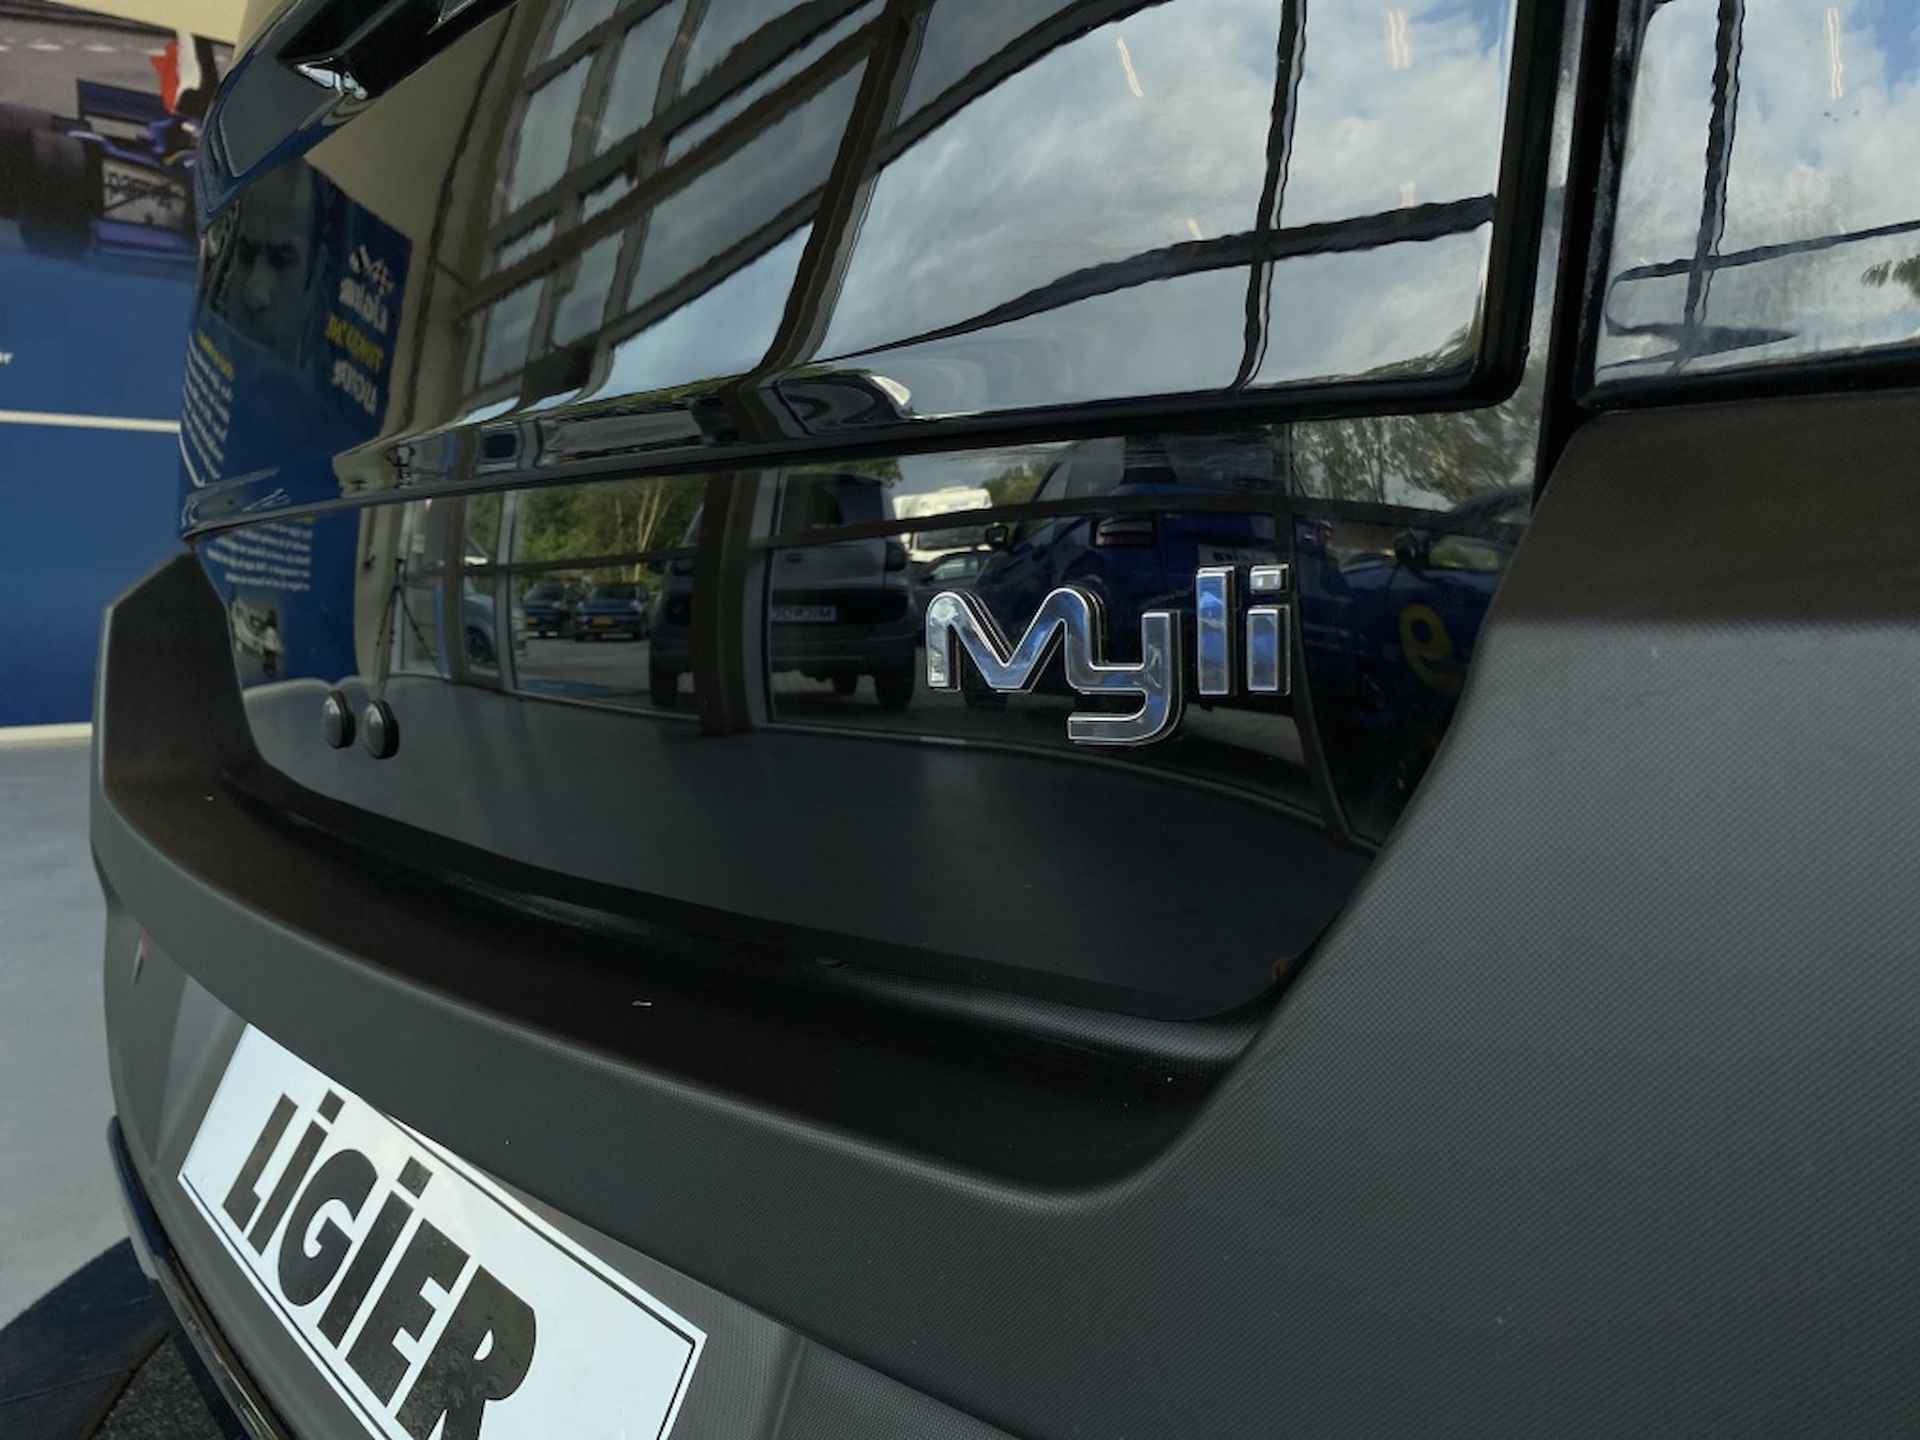 Ligier  Myli R.EBEL 12 KWH (actieradius 192 km WMTC) - 23/32